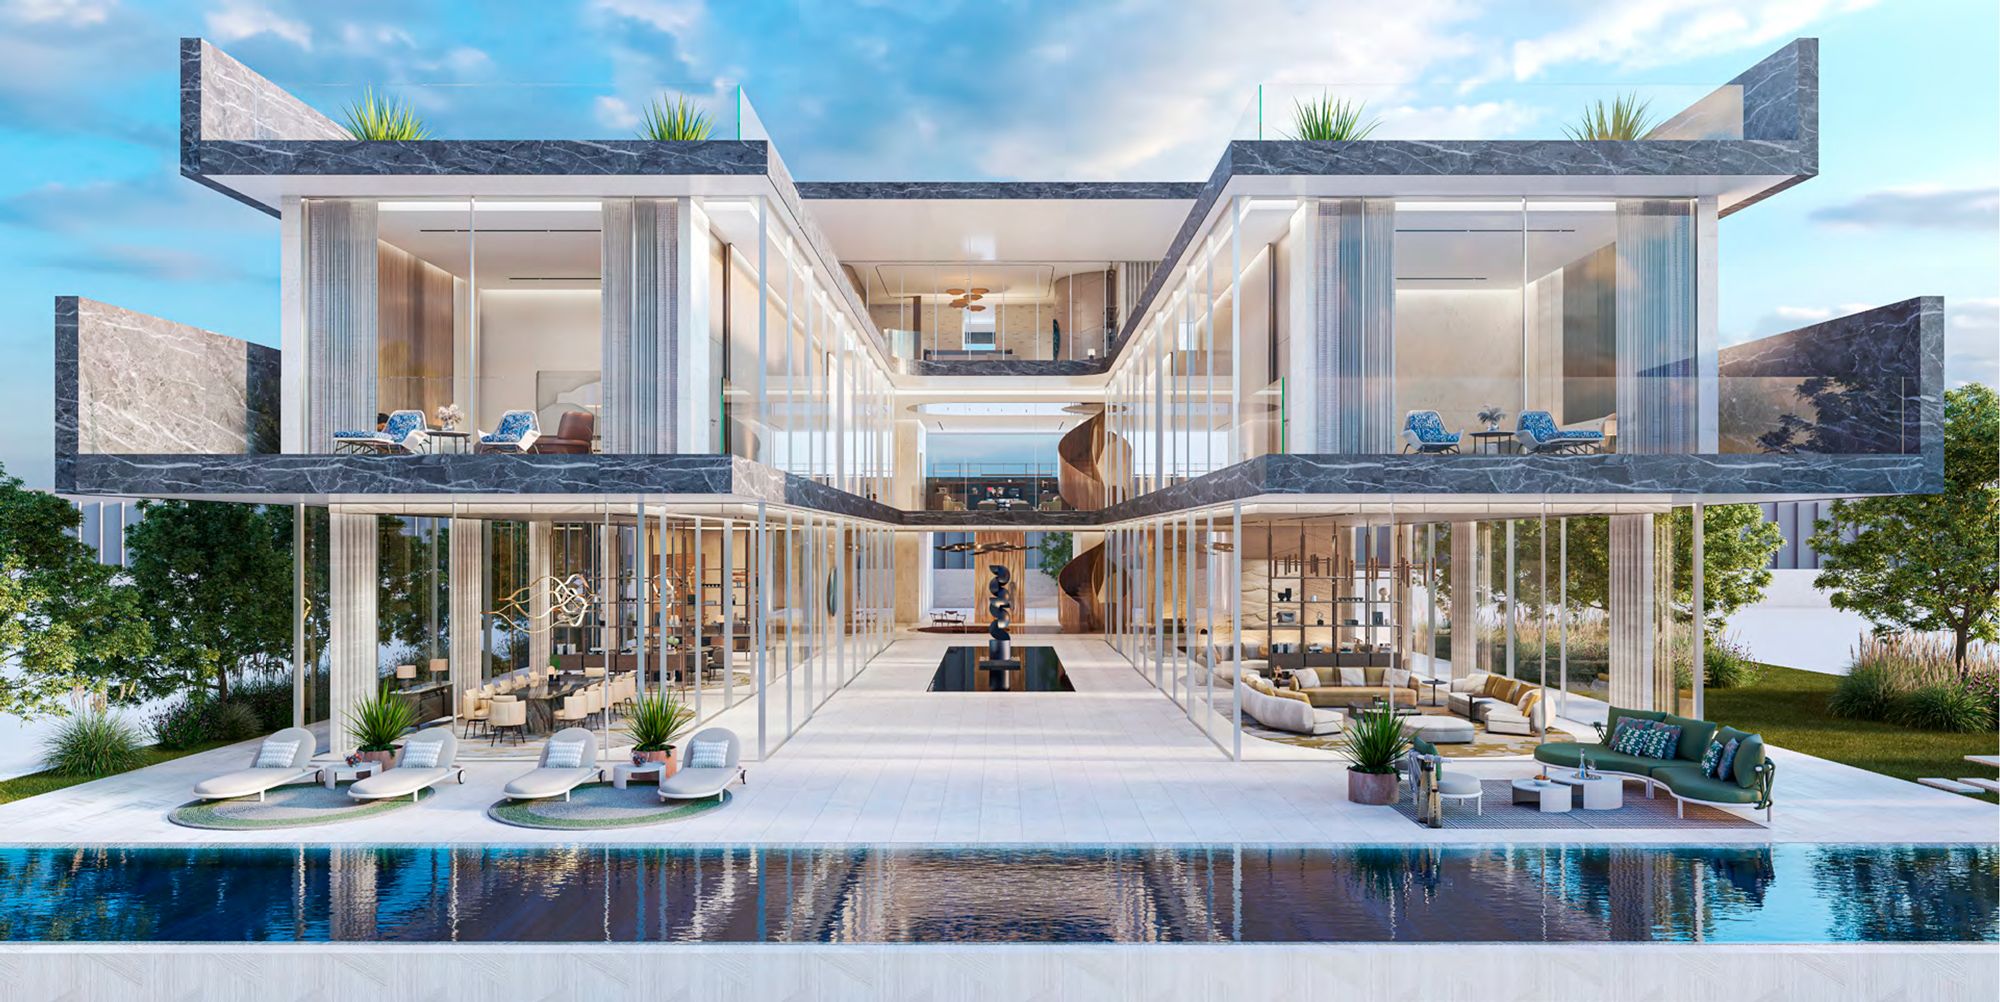 The Ritz-Carlton Mansion - Limitless Valley - Real Estate - Dubai